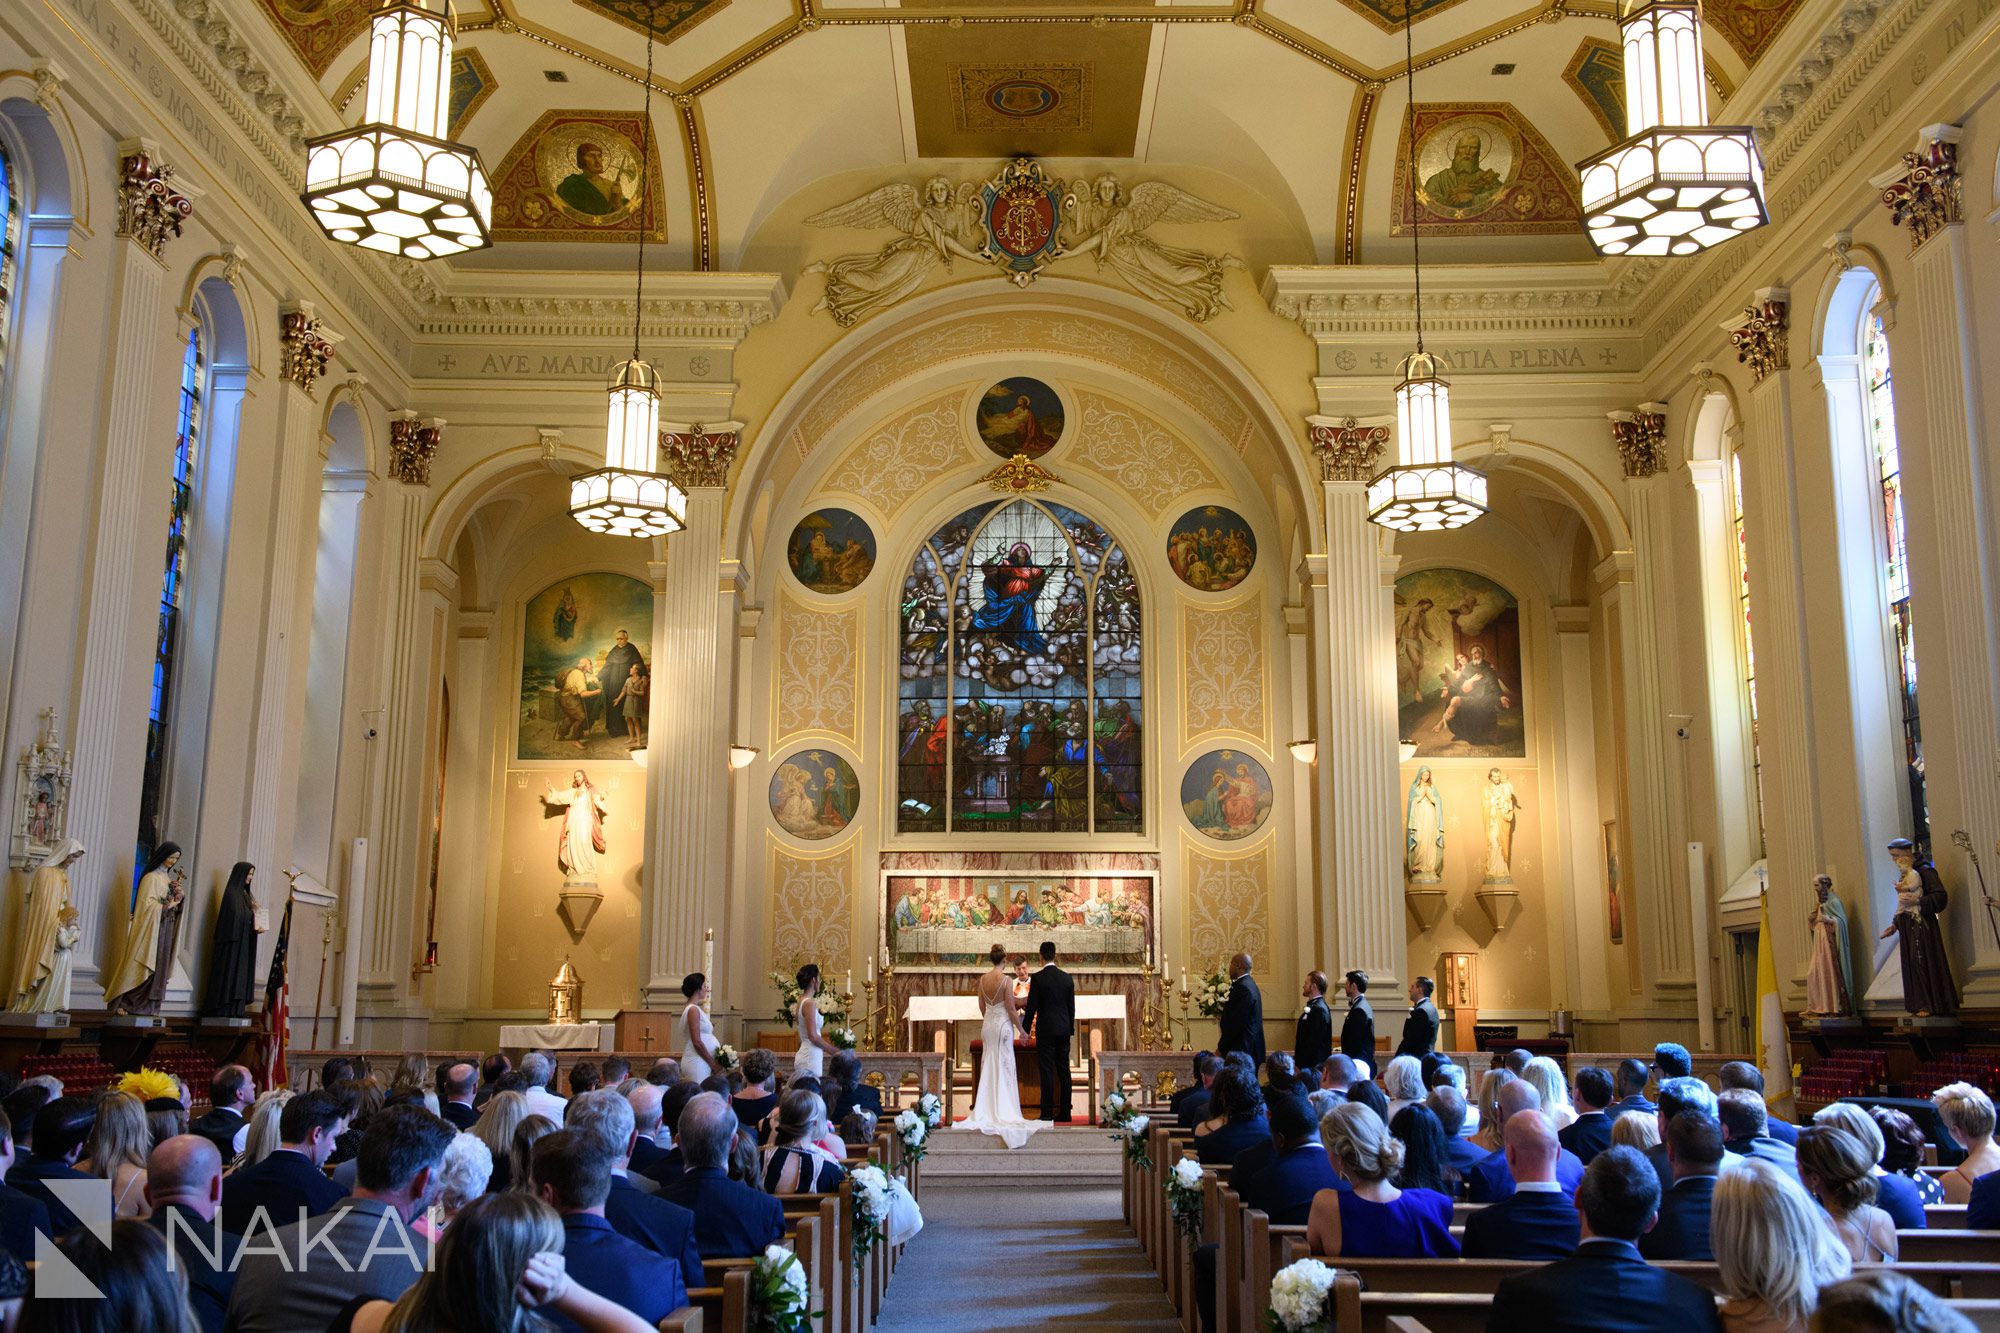 Chicago catholic wedding ceremony picture